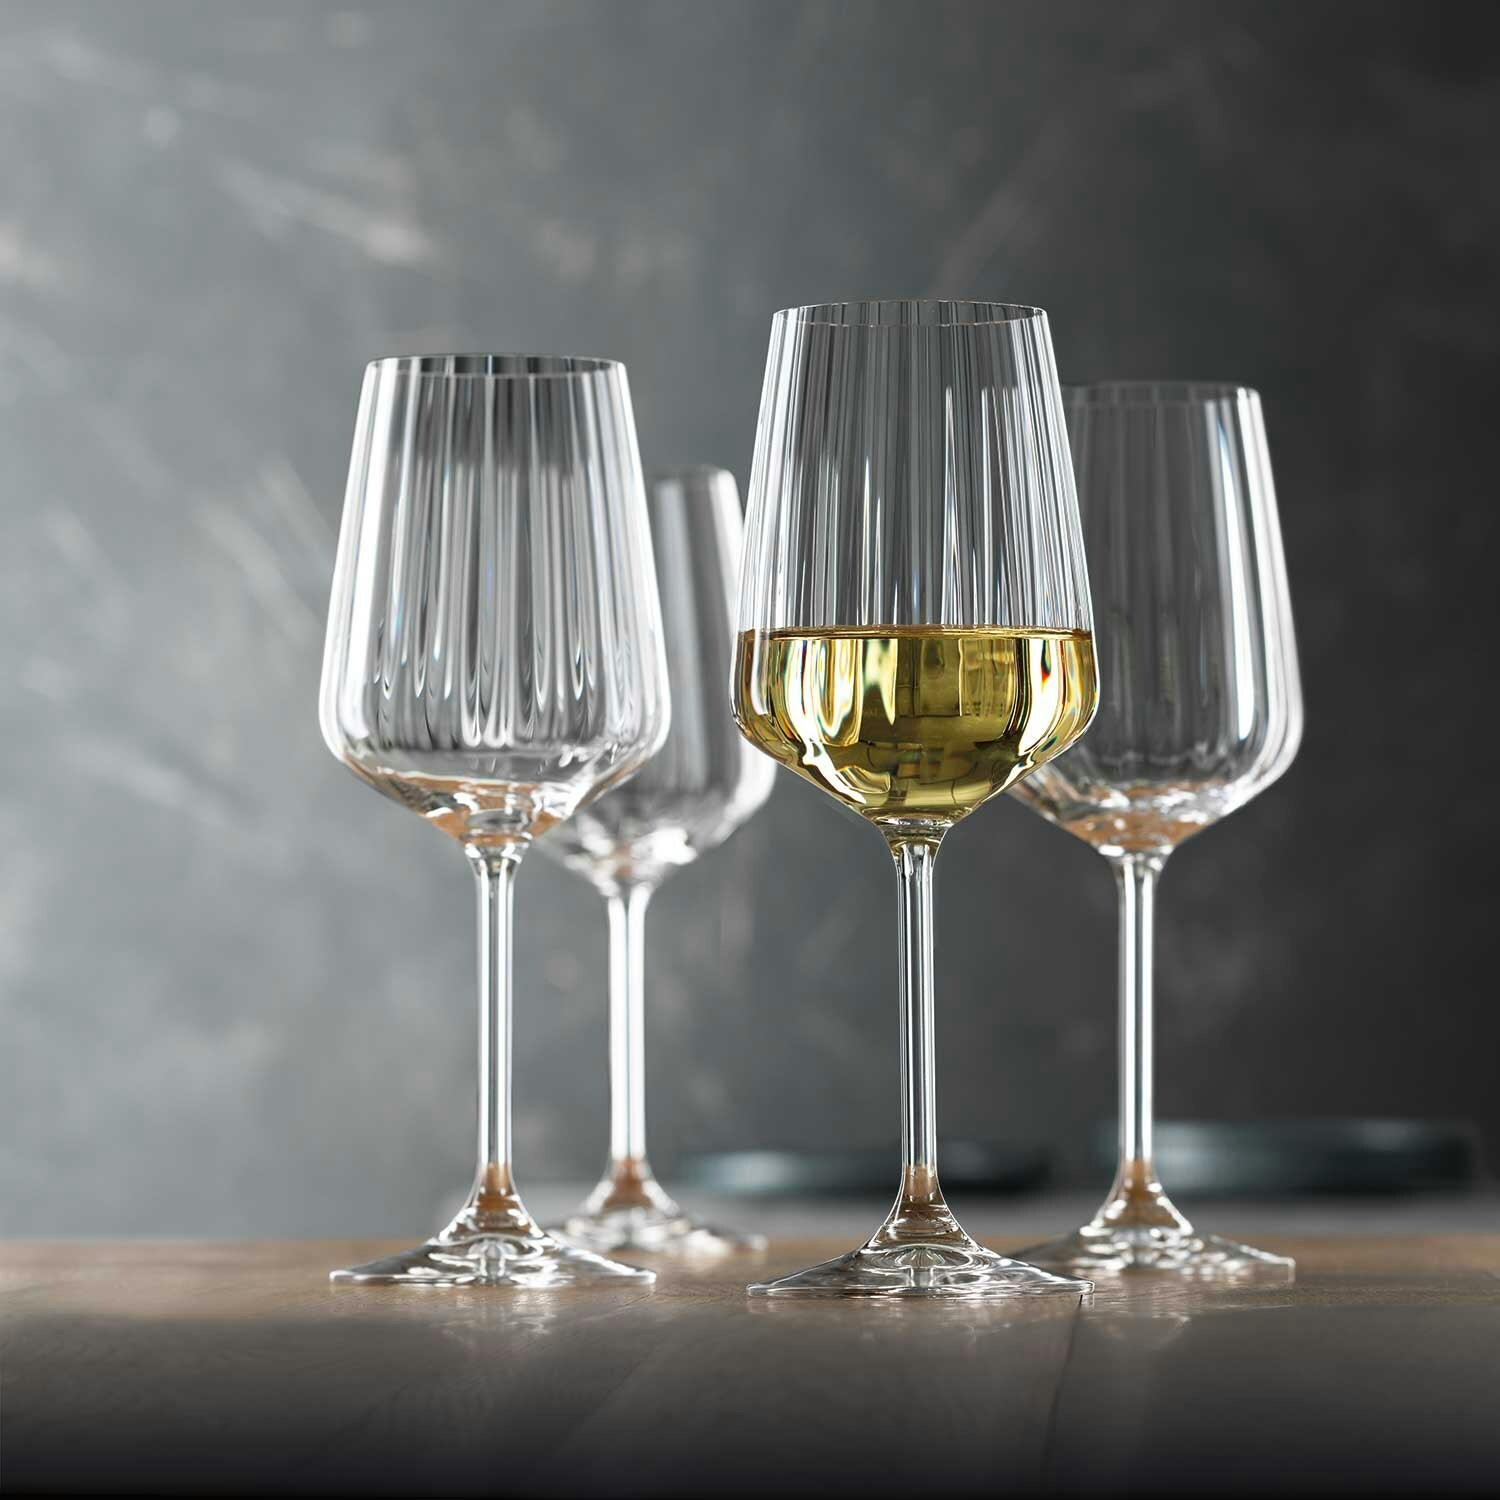 https://royaldesign.com/image/2/spiegelau-lifestyle-white-wine-glass-44-cl-4-pcs-1